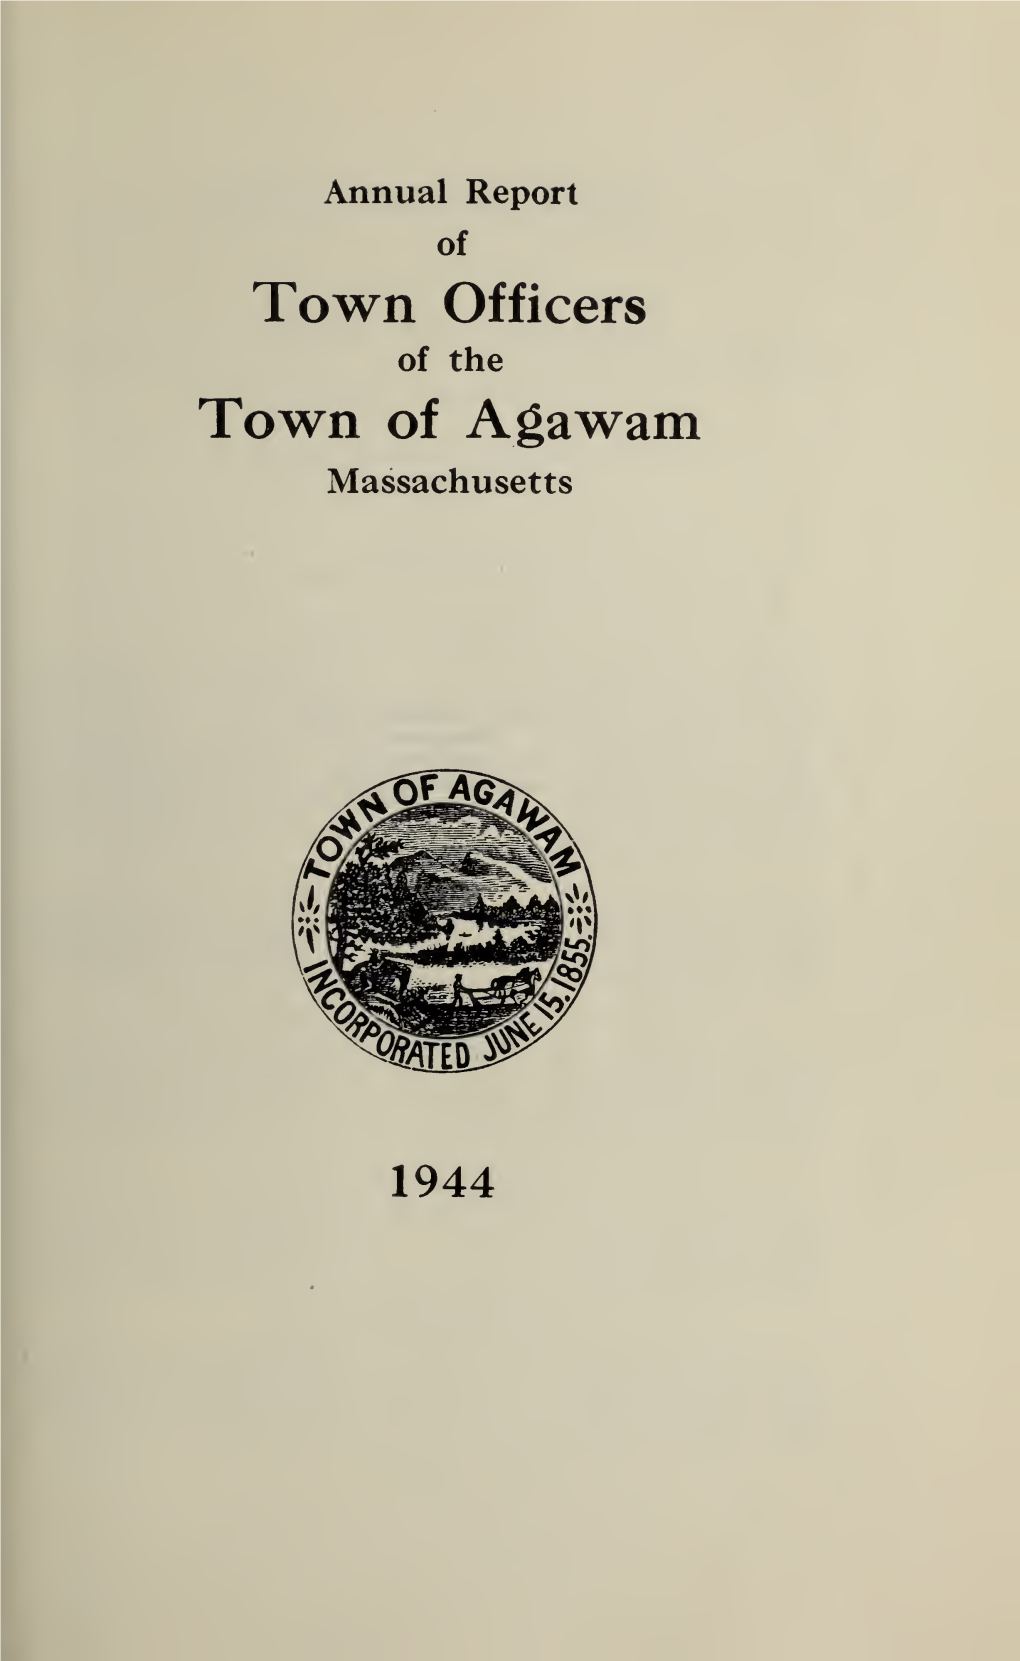 Town of Agawam, Massachusetts Annual Report